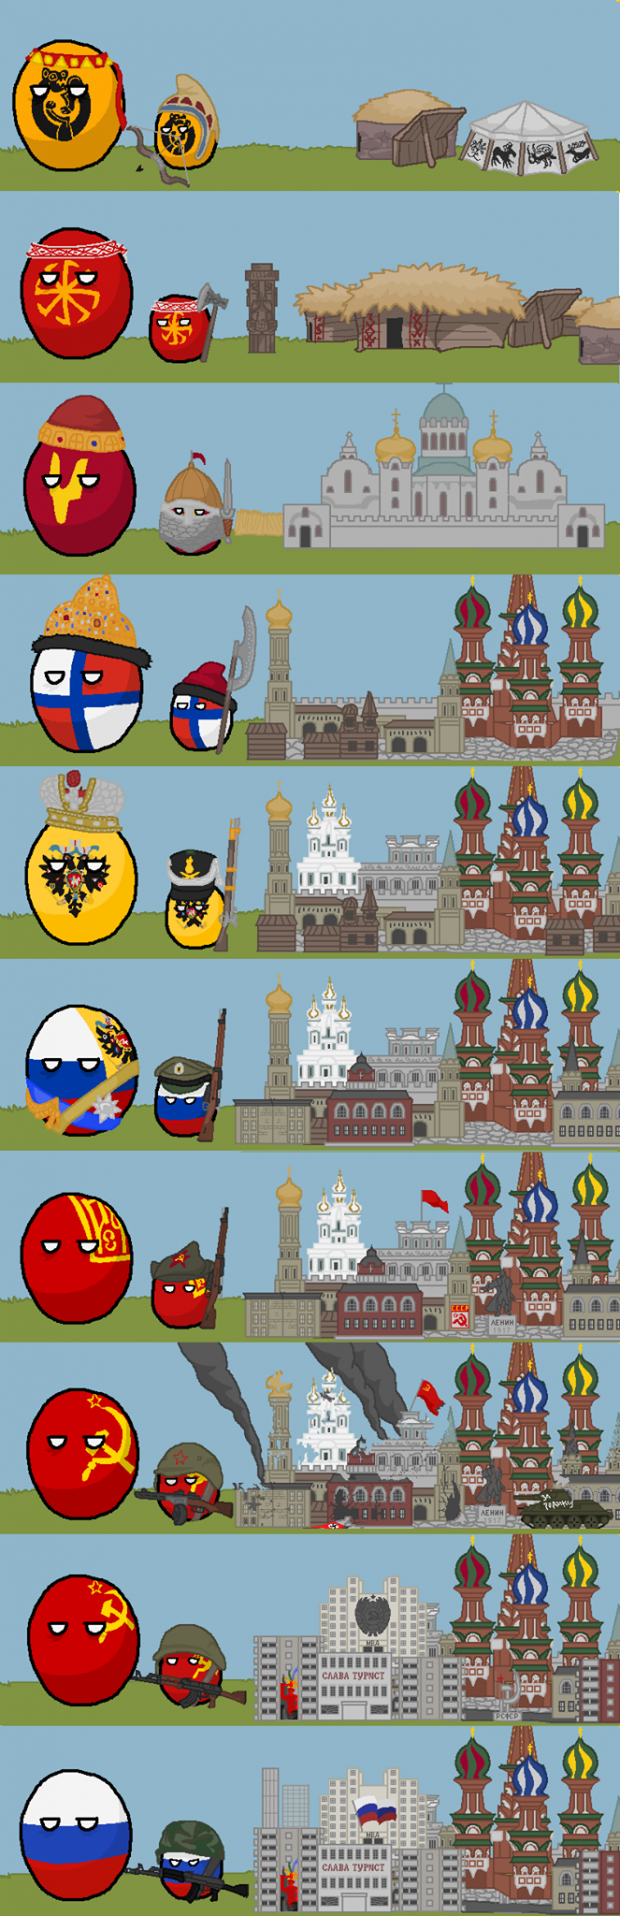 Evolution of Russia